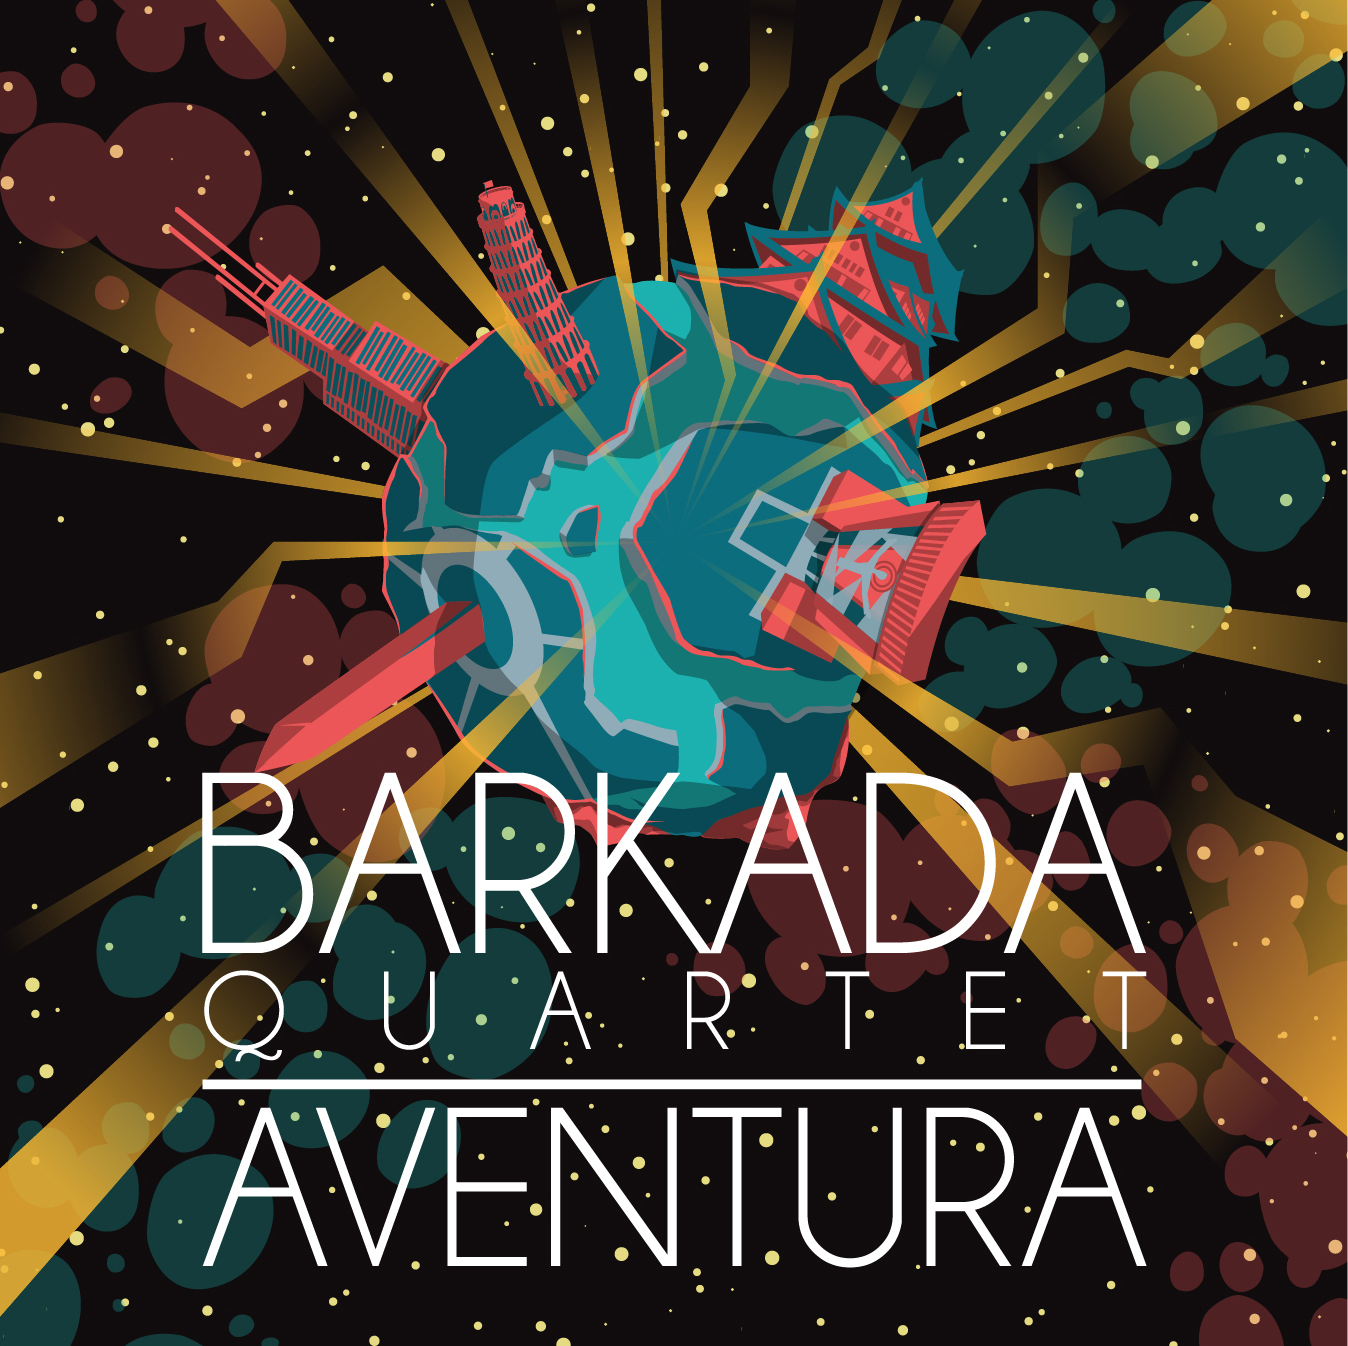 Aventura-cover The Barkada Quartet